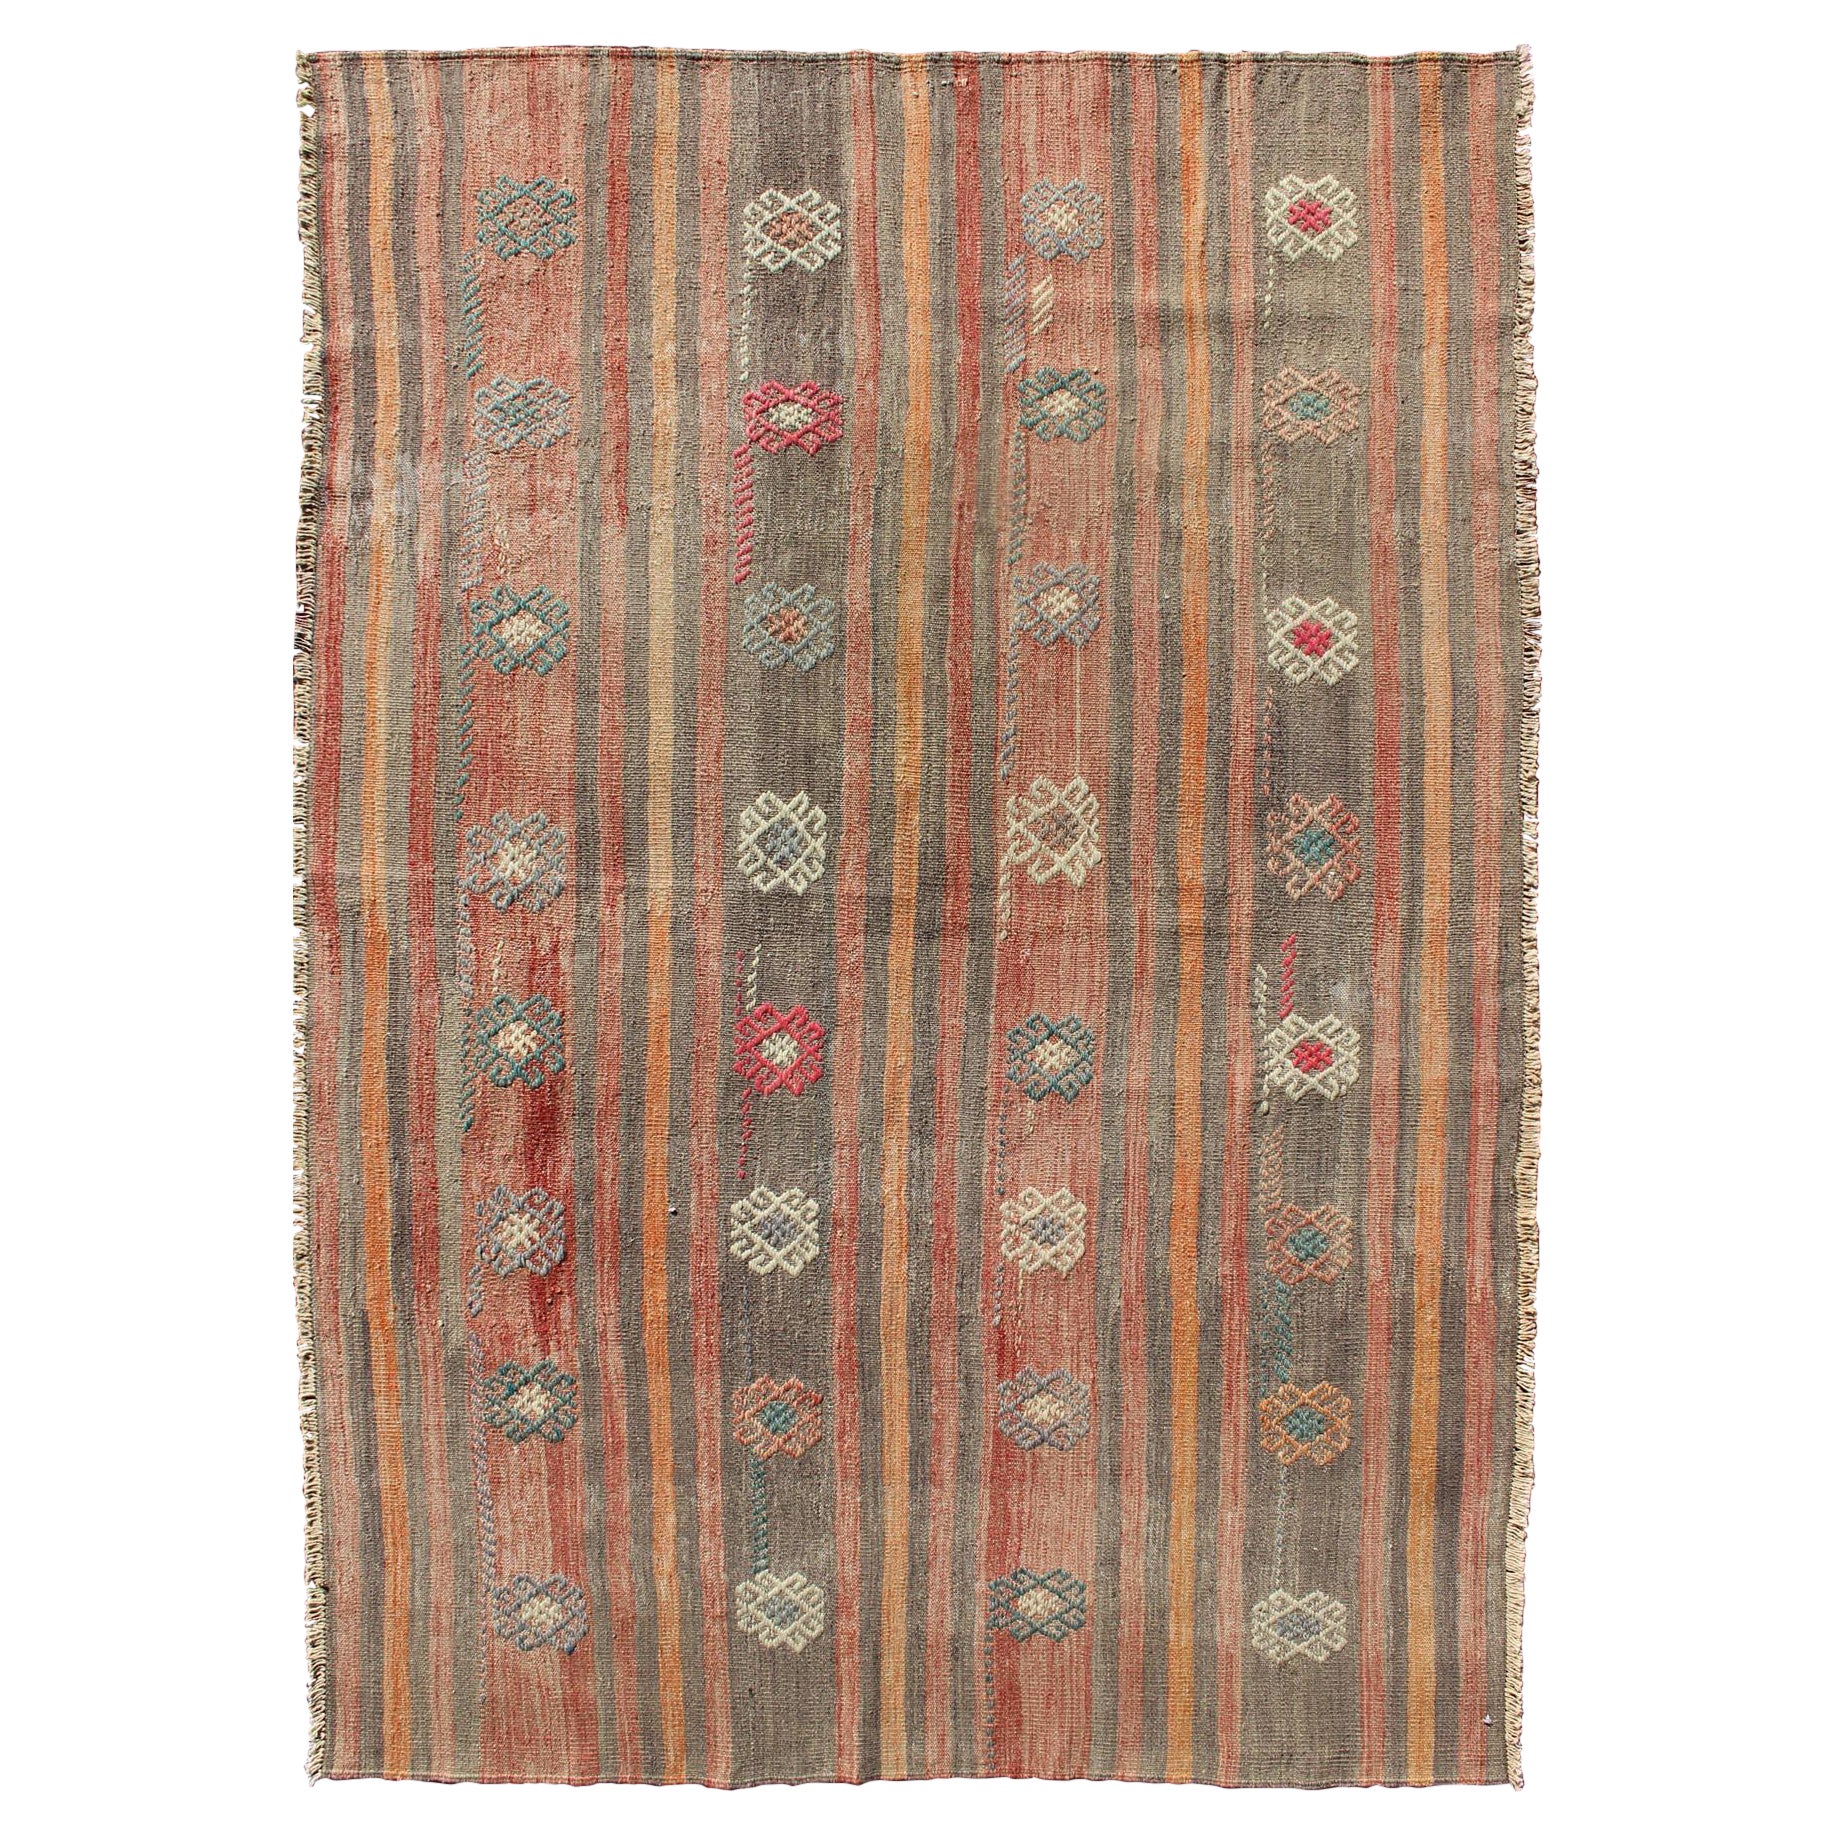 Colorful Vintage Turkish Flat-Weave Kilim Rug with Striped Geometric Design